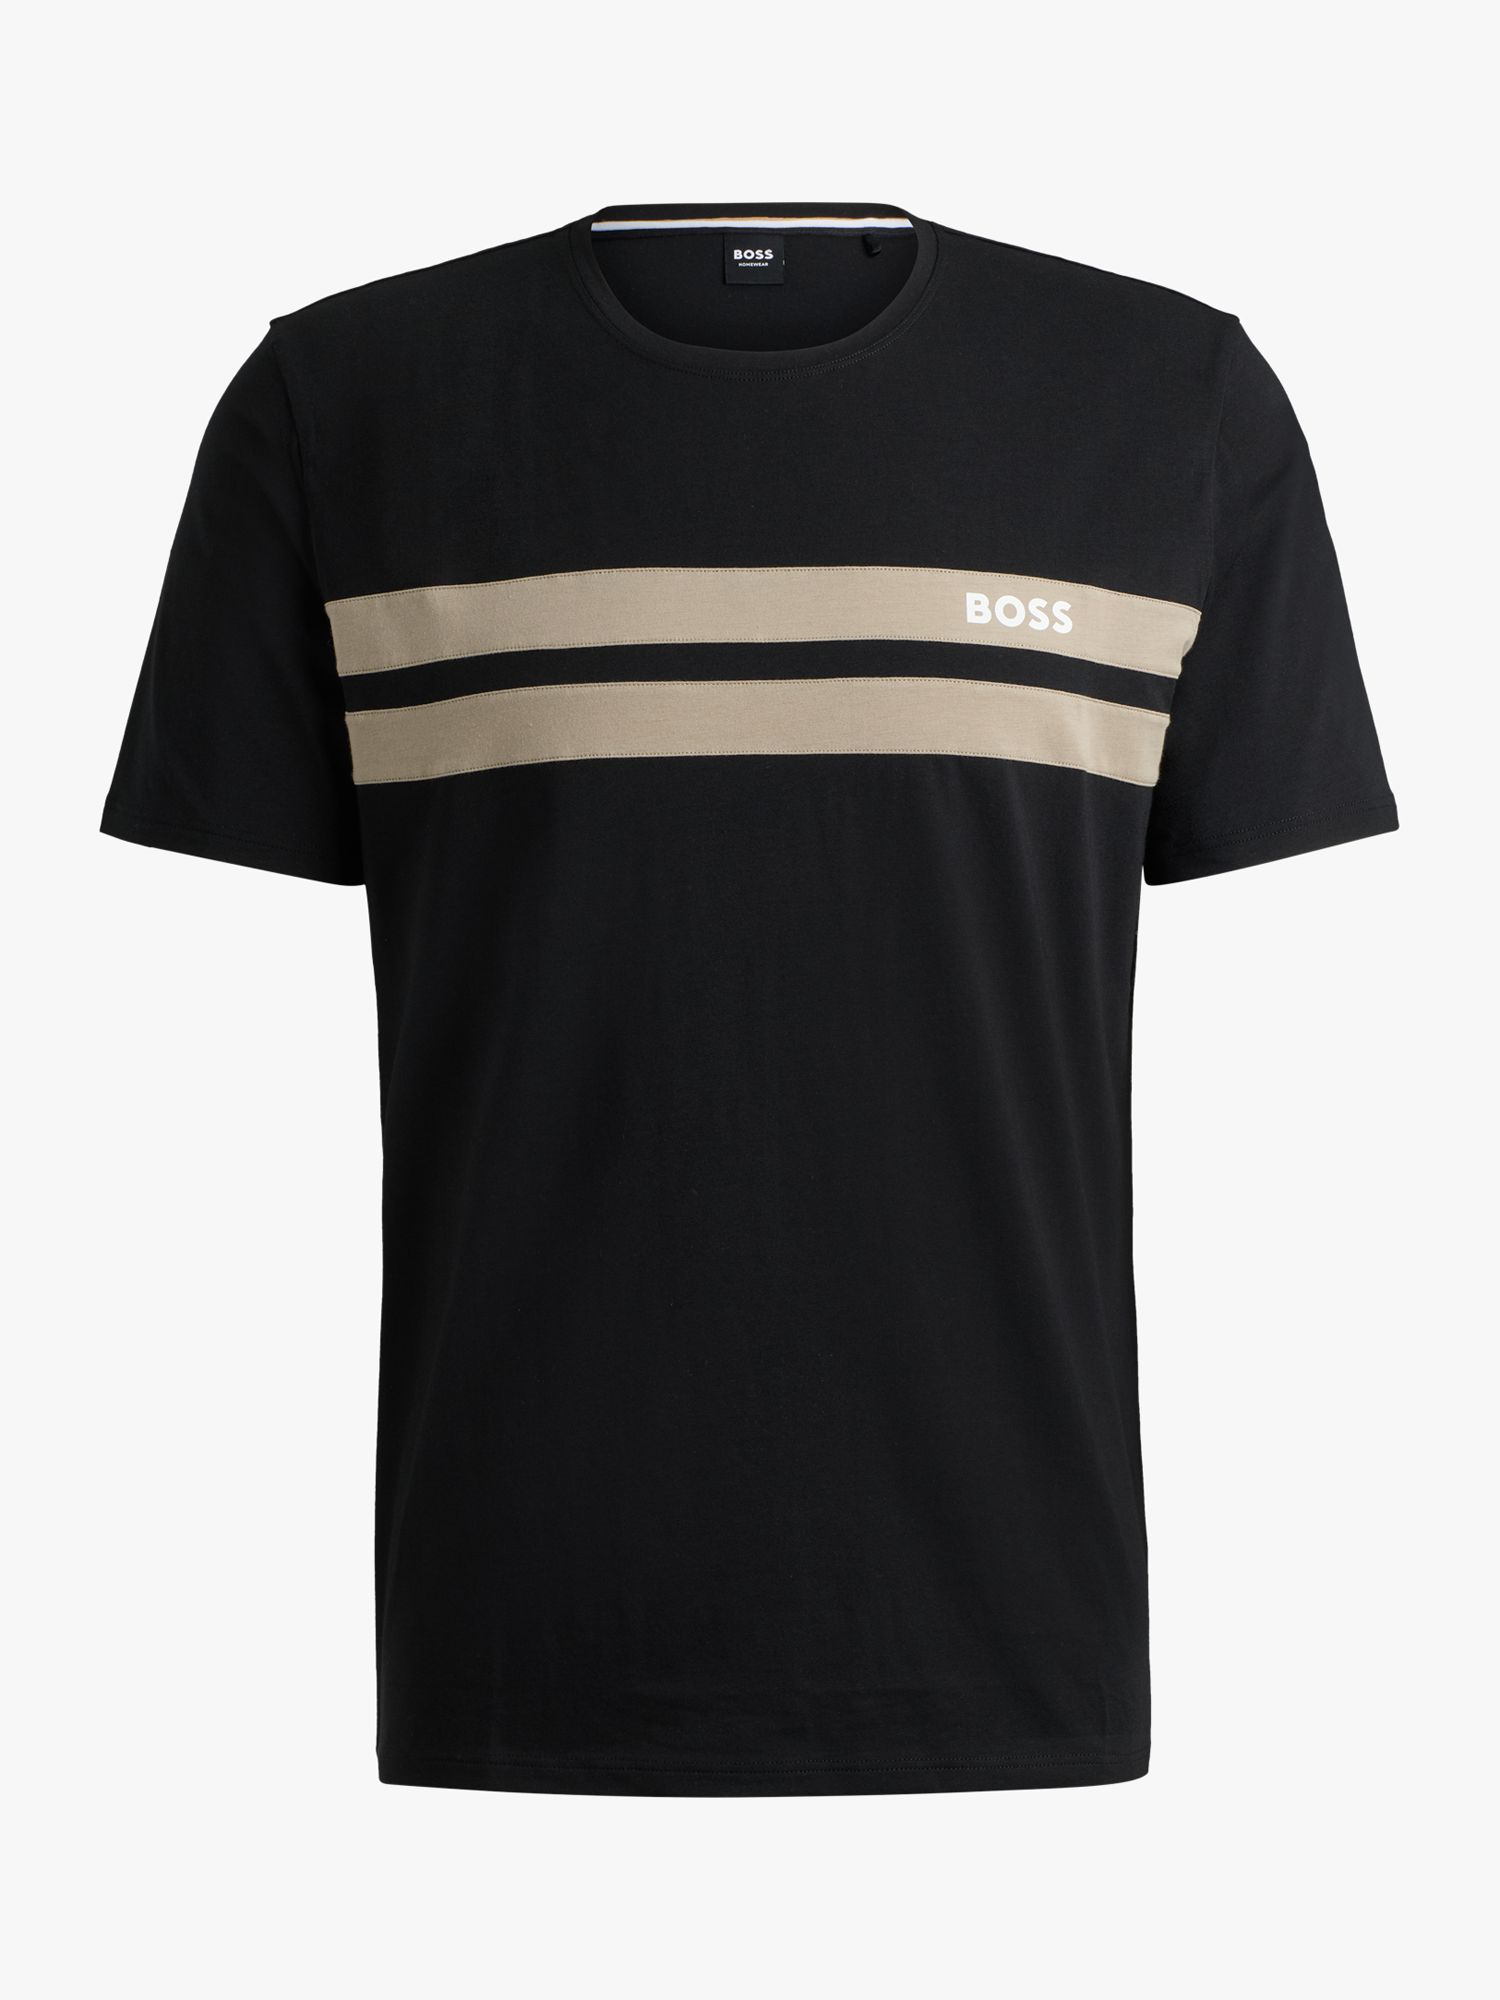 BOSS Balance T-Shirt, Black, L